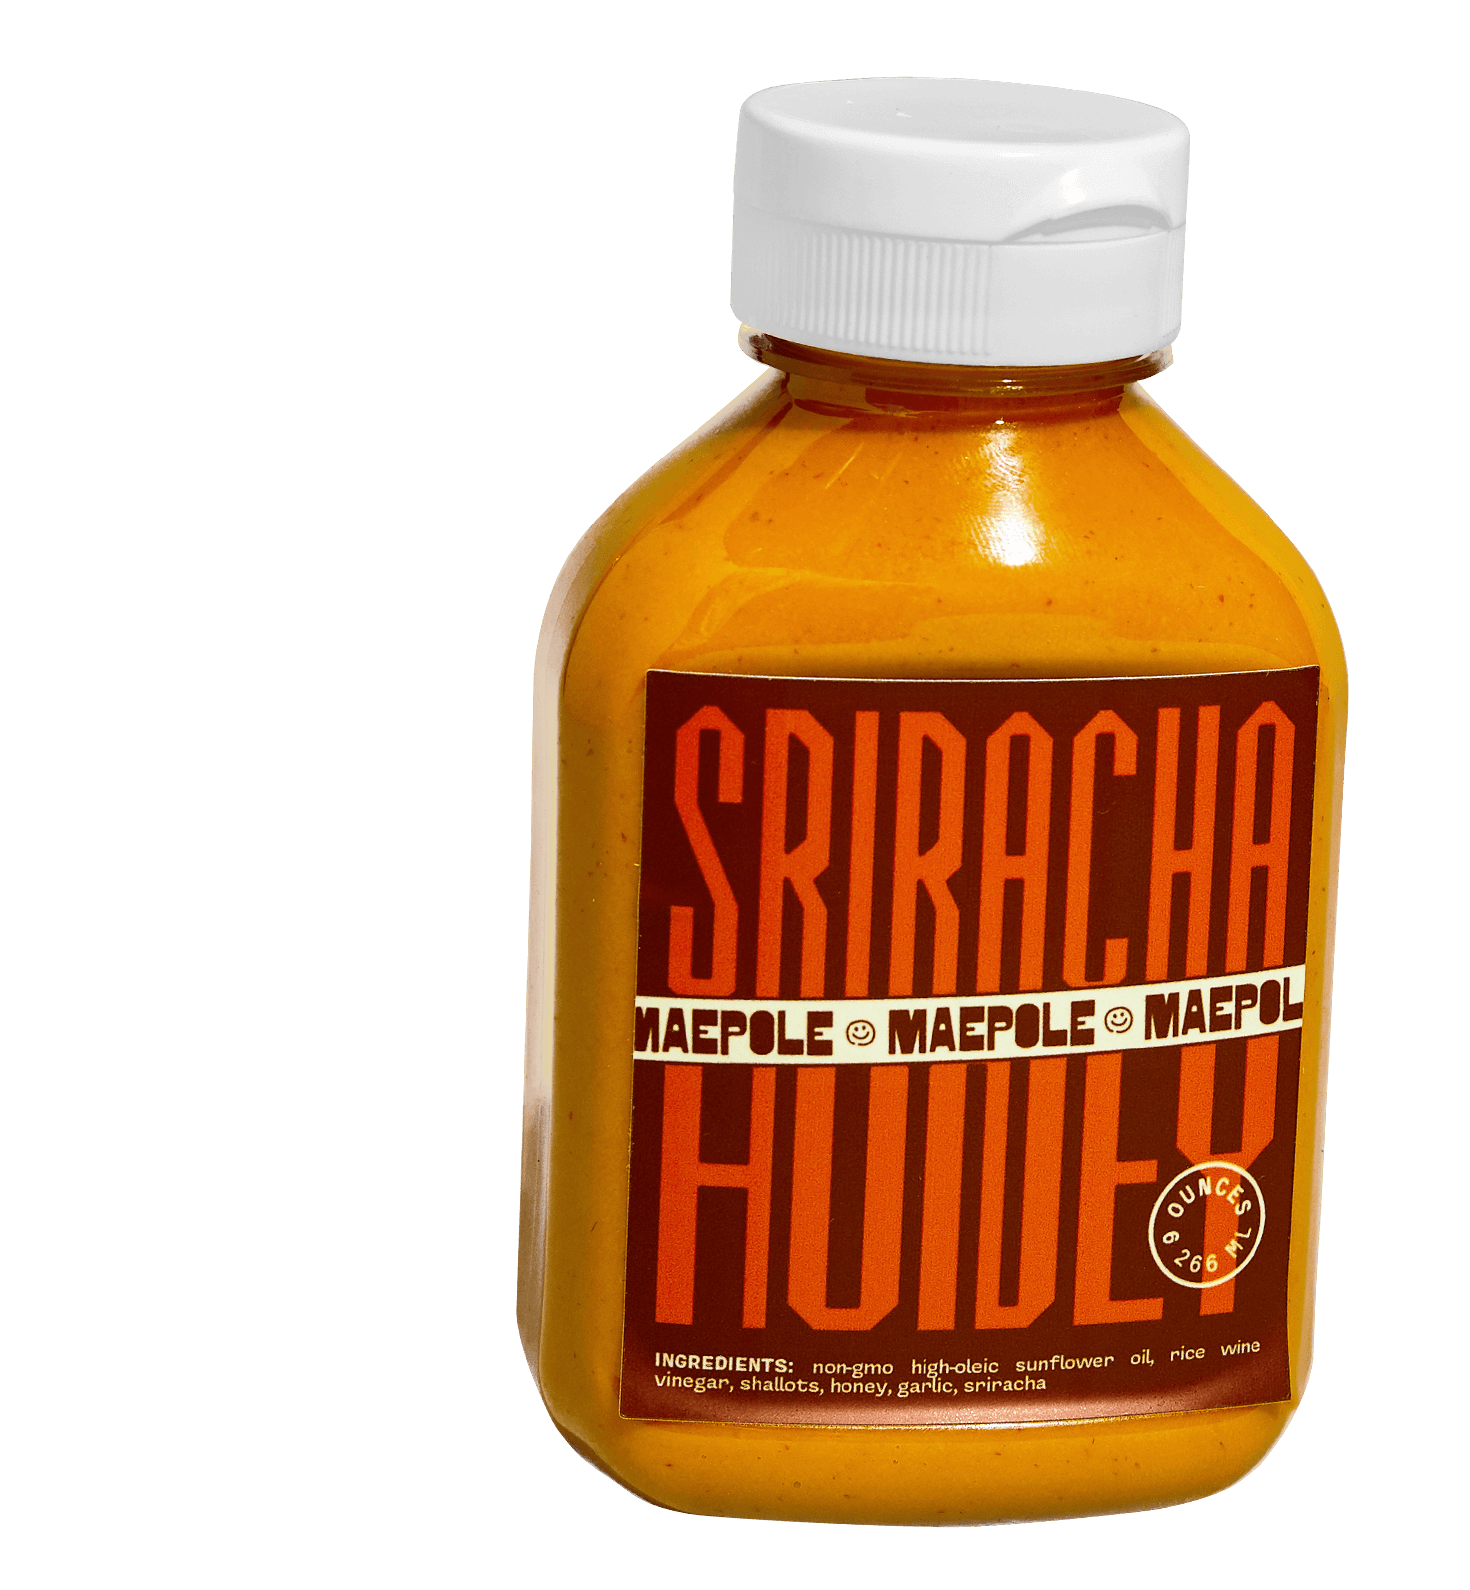 A bottle of Maepole Sriracha Honey sauce